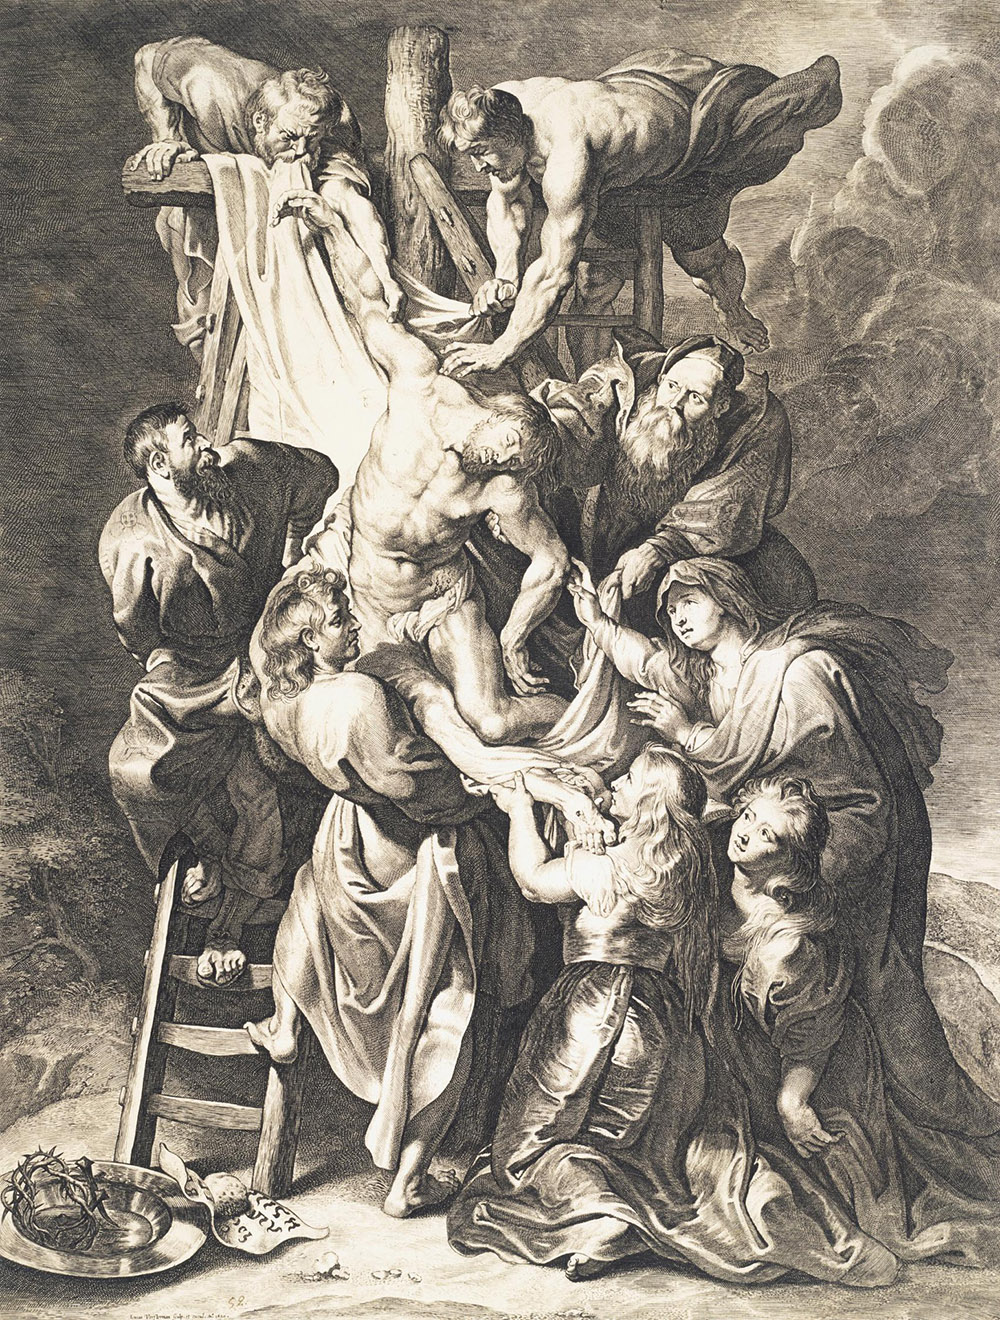 Лукас Ворстерман I, инвентор - Питер Пауль Рубенс. "Снятие с креста". 1620. Эрмитаж, Санкт-Петербург.